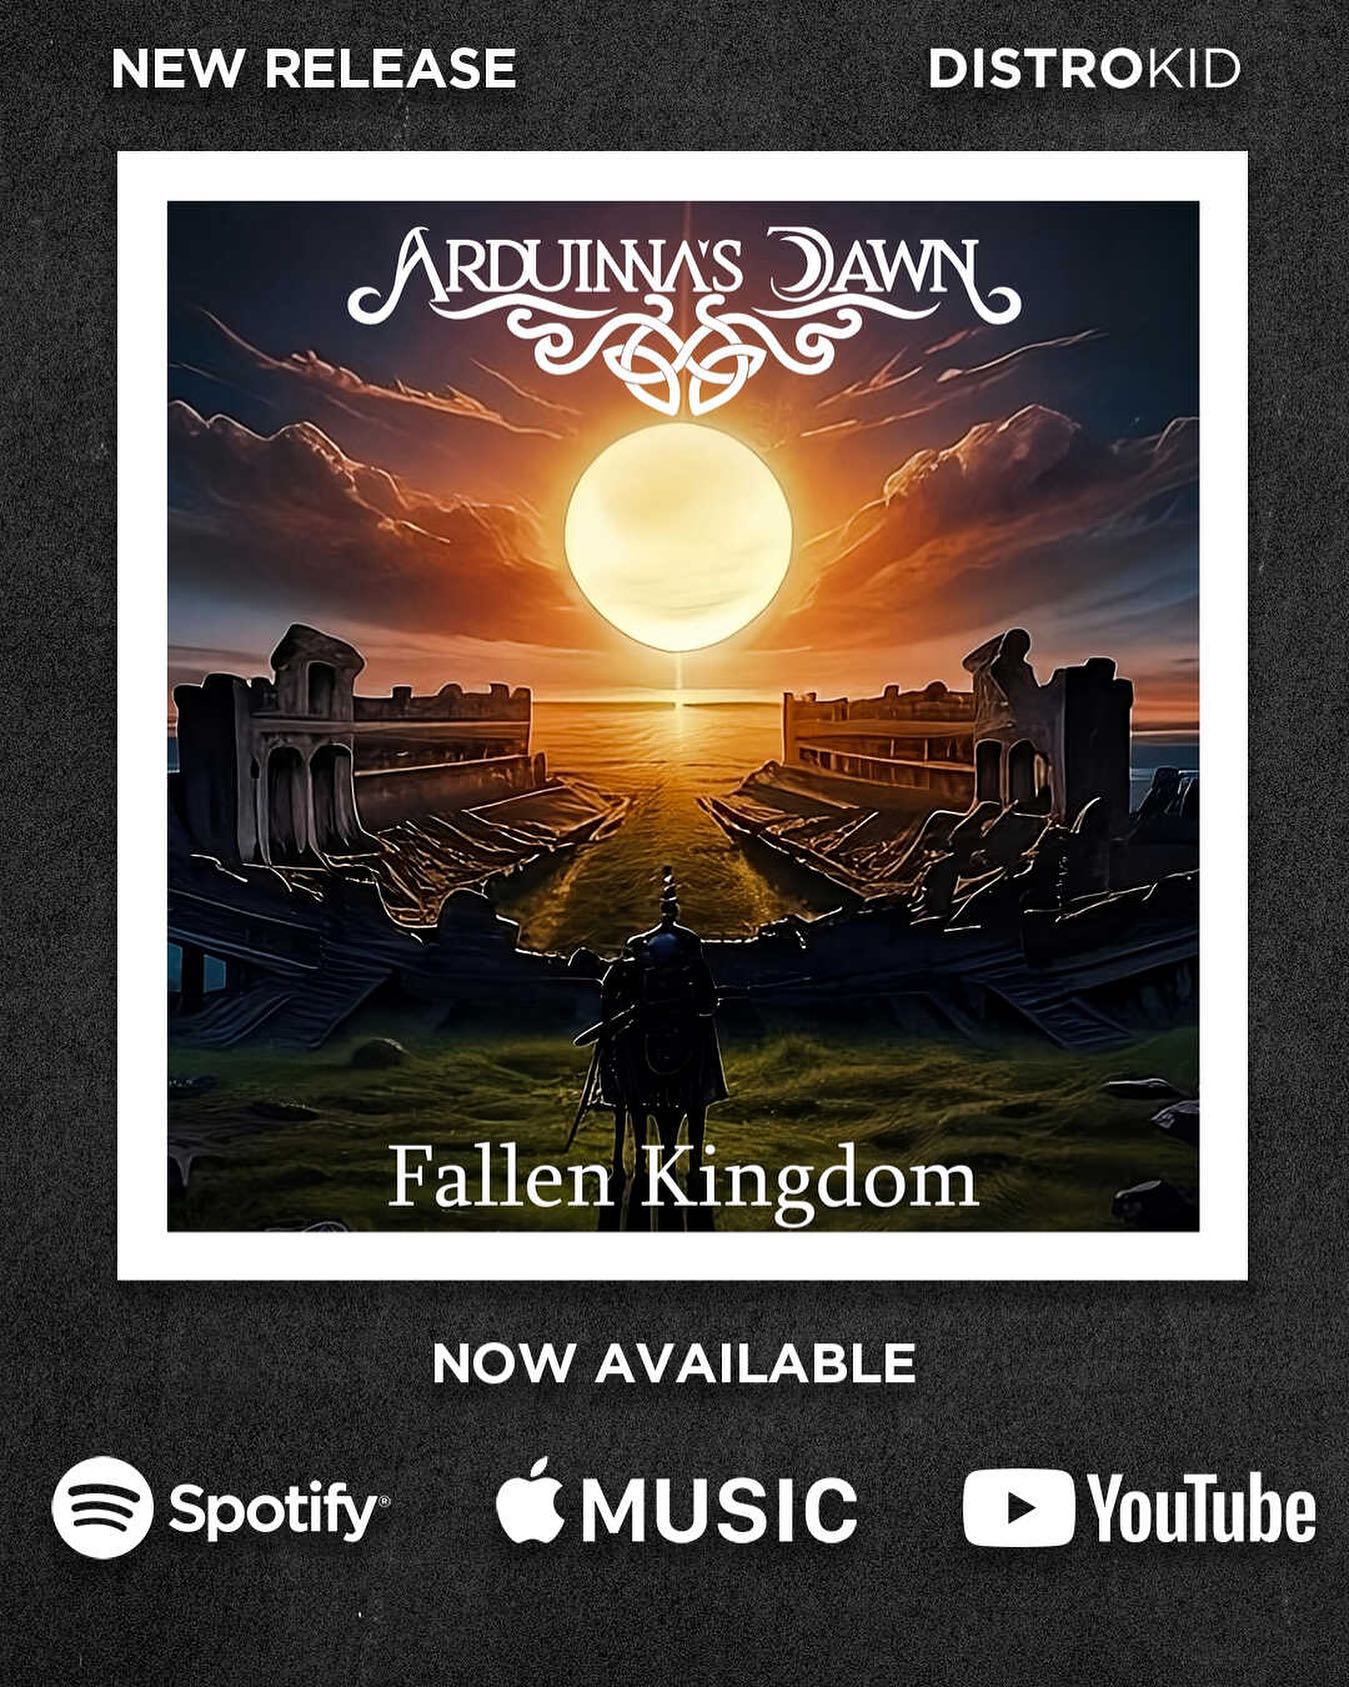 Fallen Kingdom - epic single out!